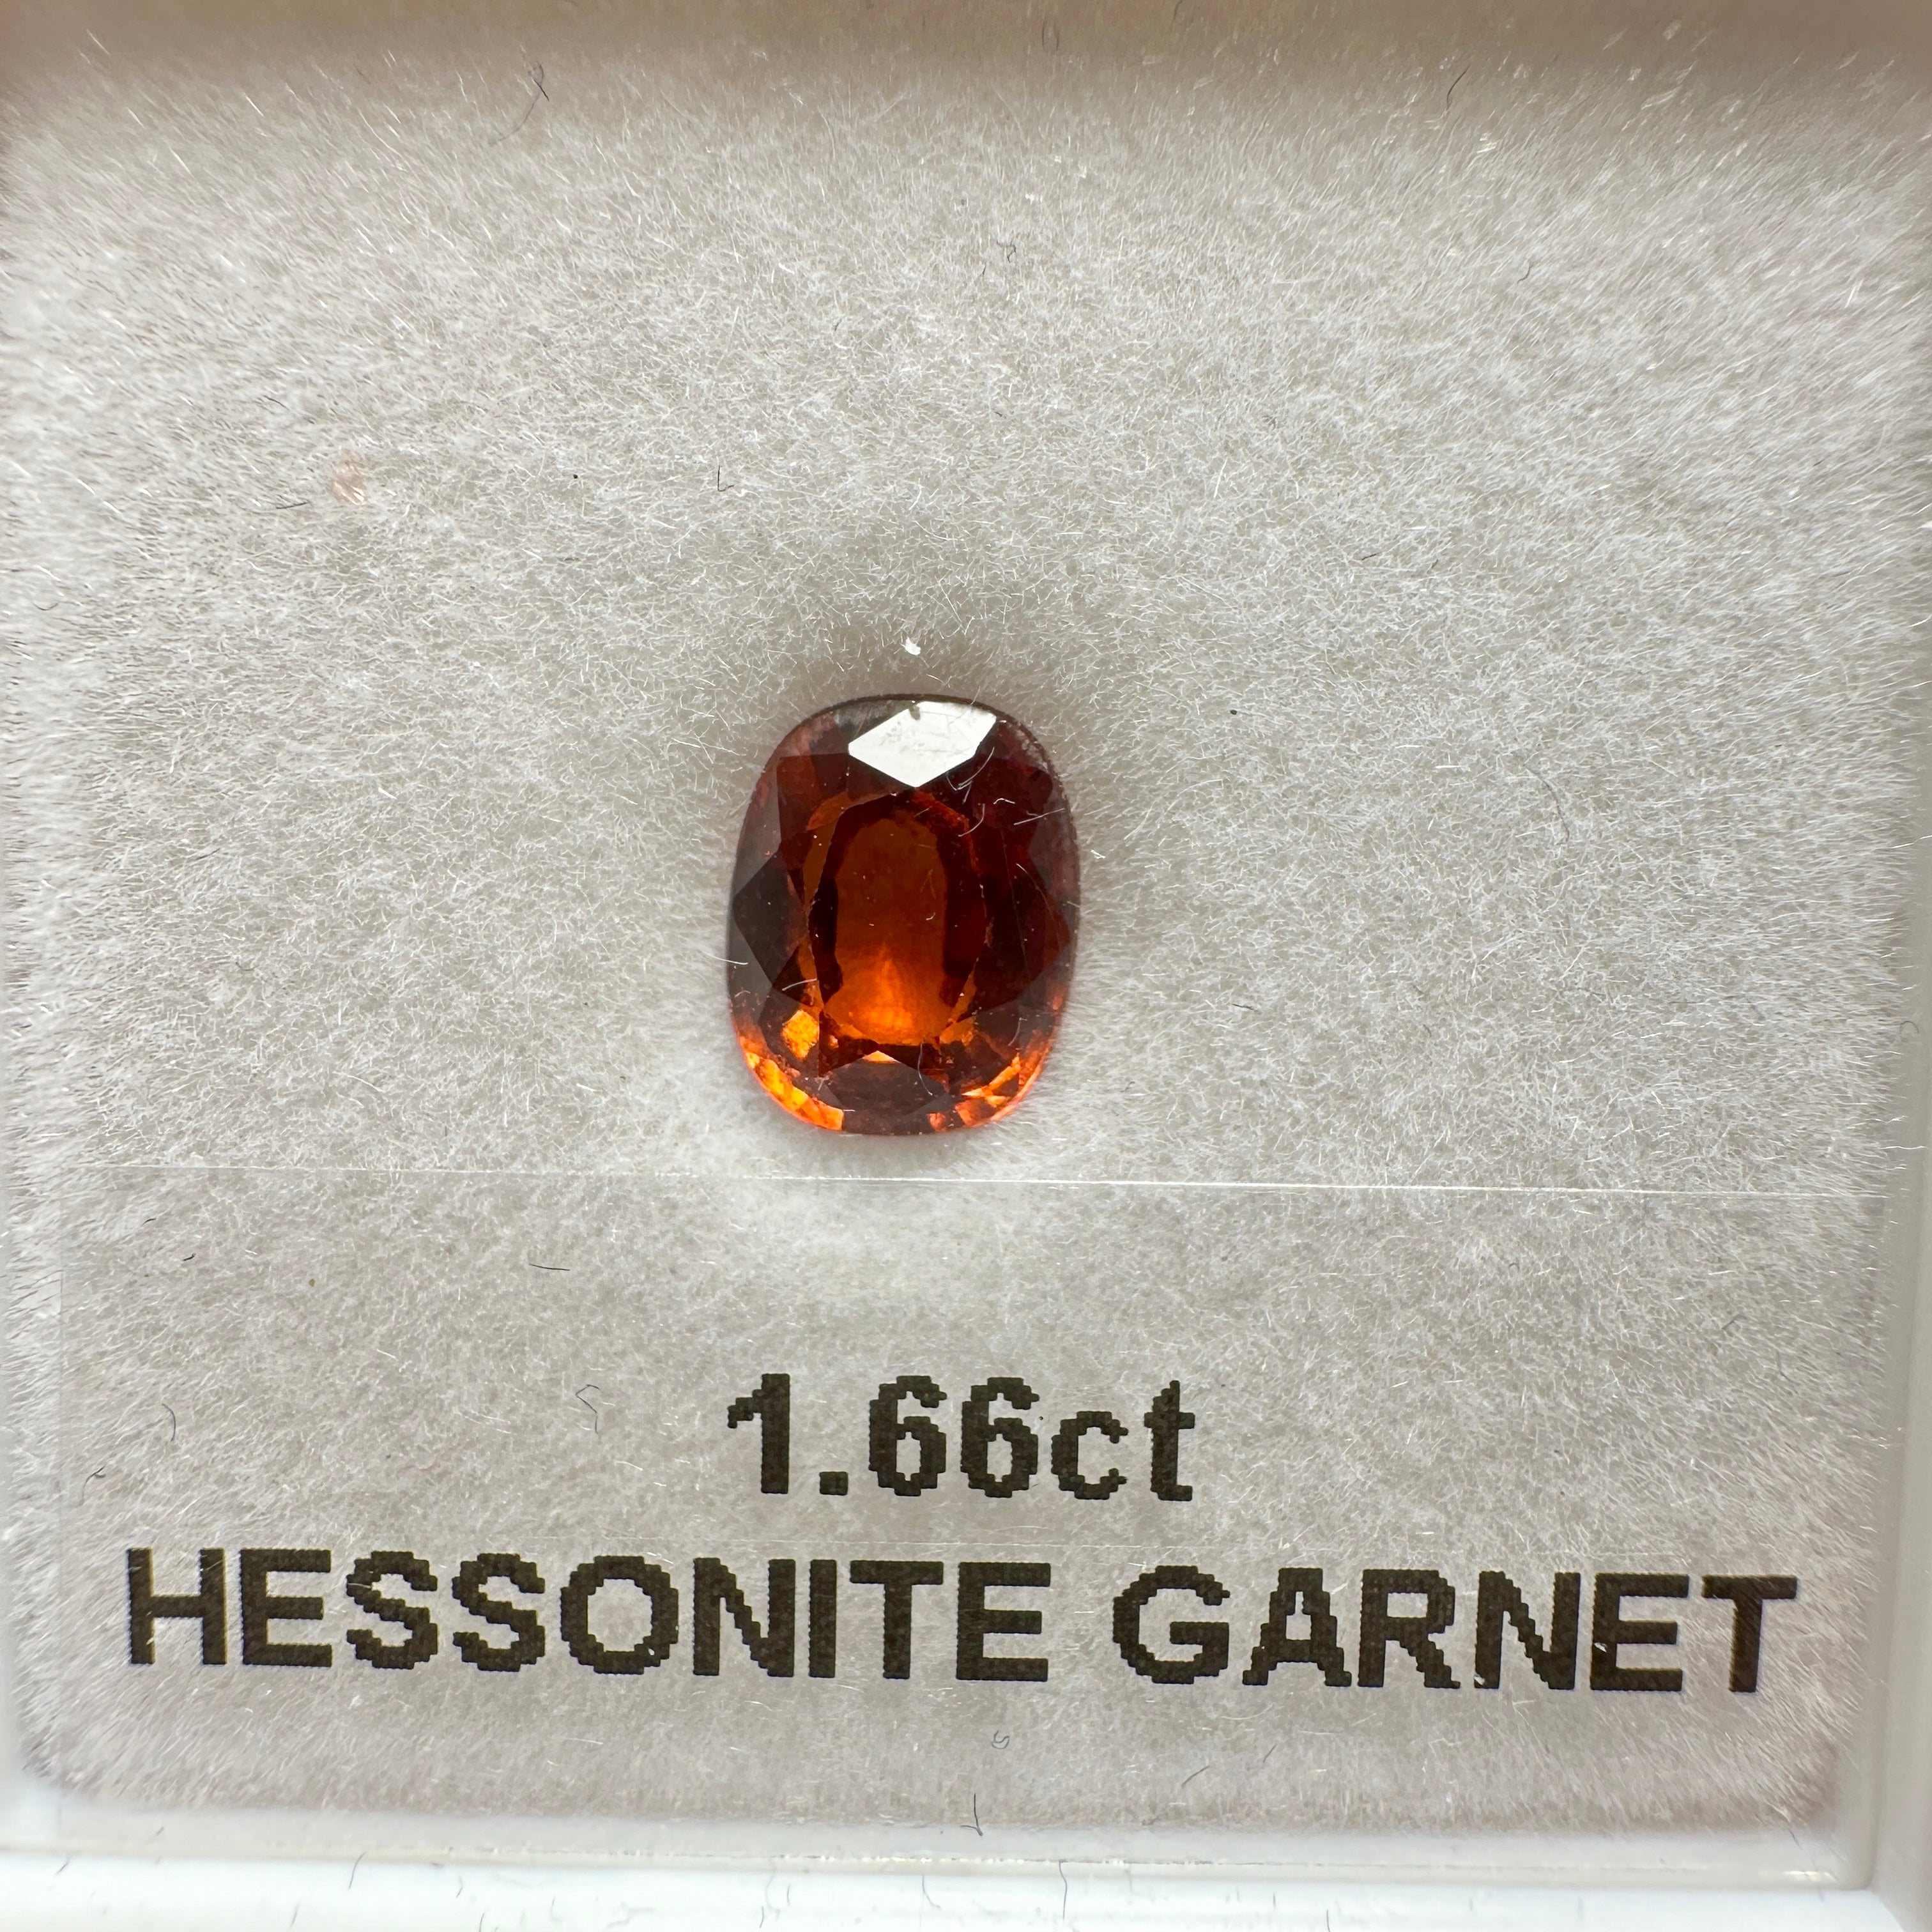 1.66ct Hessonite Garnet, Untreated Unheated, native cut